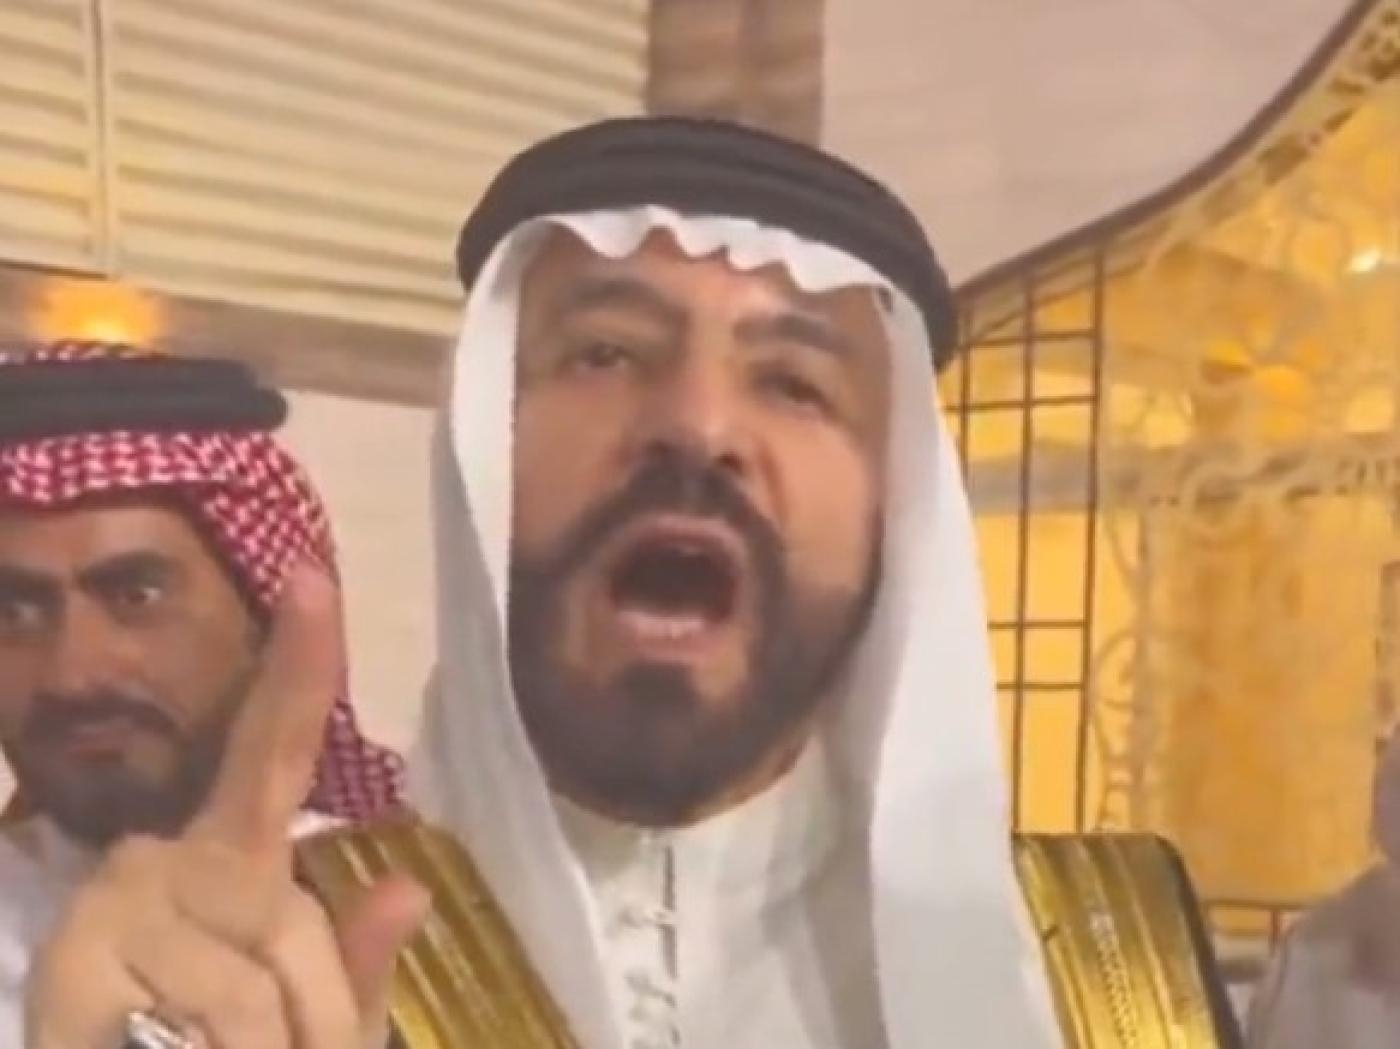 Saud al-Shaalan est chef tribal et petit-fils du roi Abdelaziz ben Abderrahmane al-Saoud (capture d’écran)